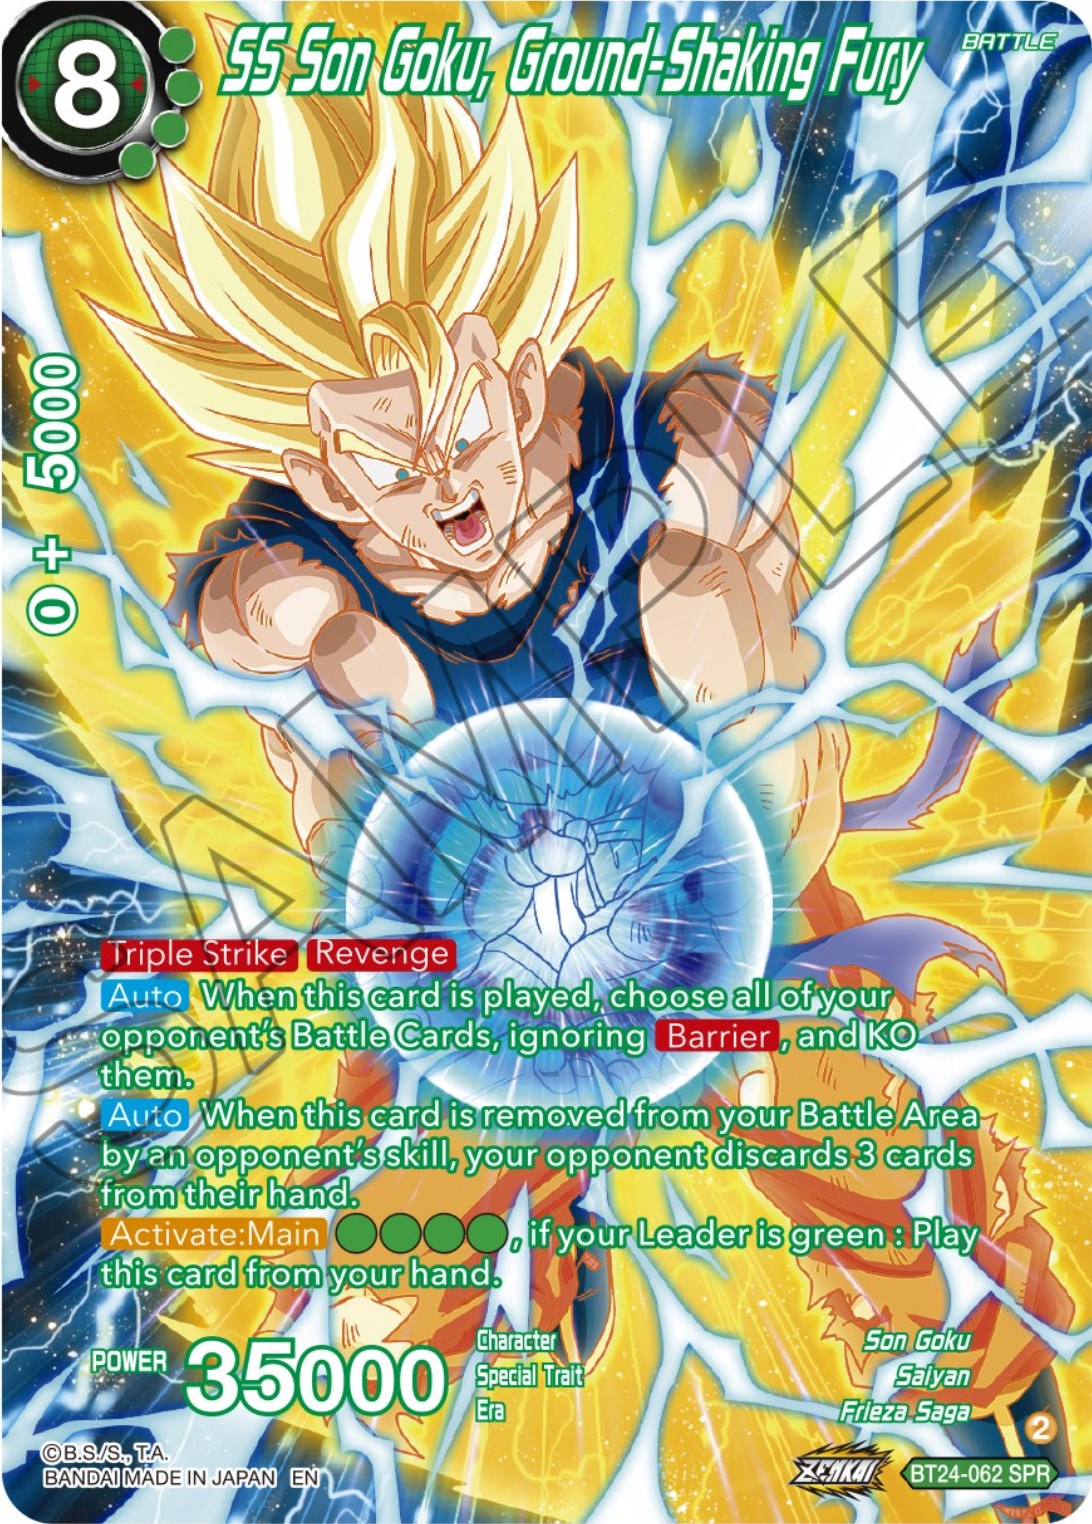 SS Son Goku, Ground-Shaking Fury (SPR) (BT24-062) [Beyond Generations] | Amazing Games TCG